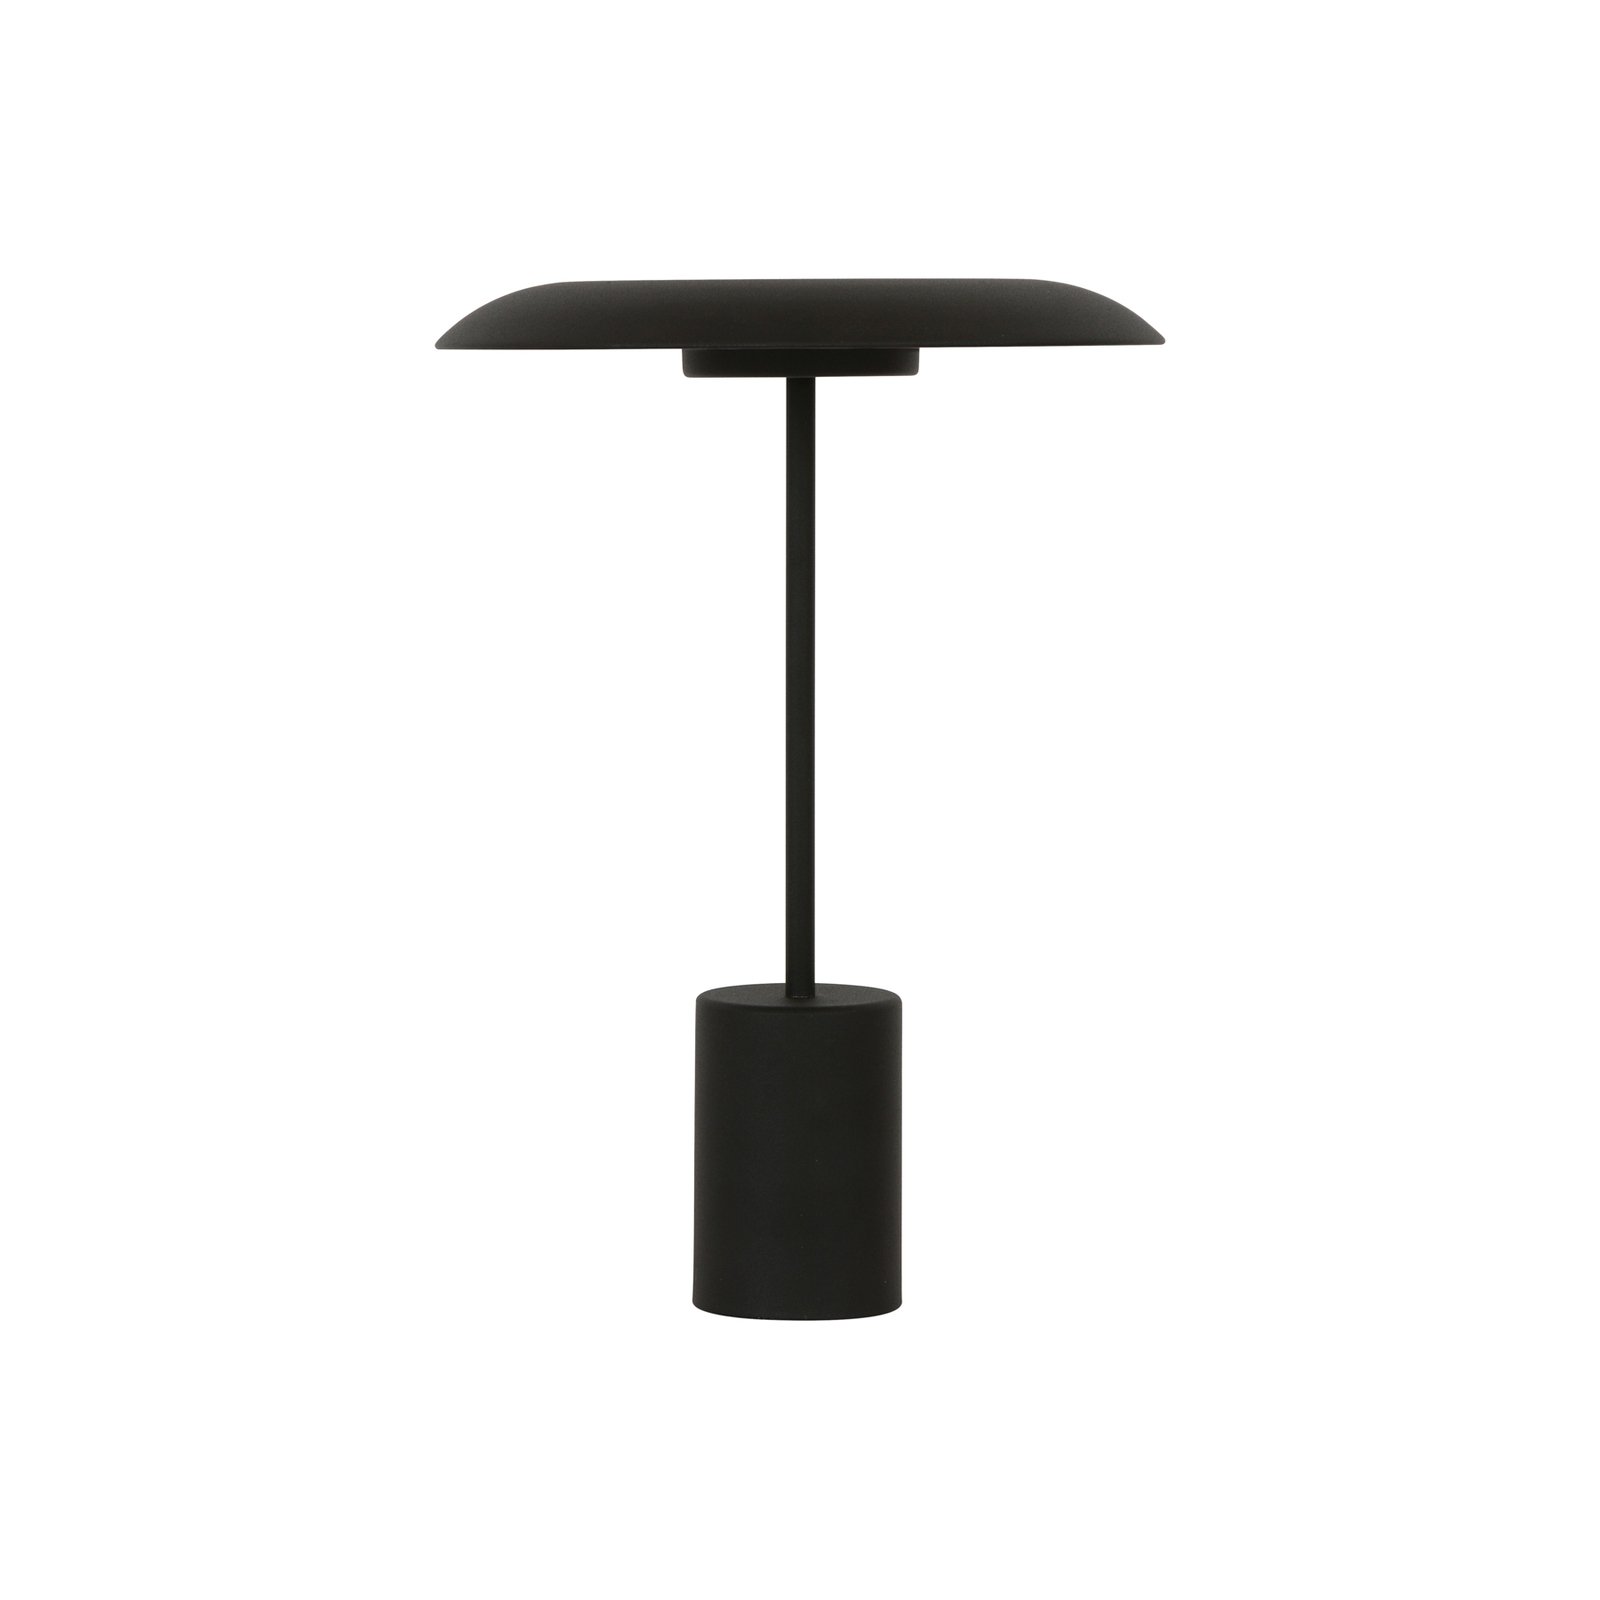 Beacon LED table lamp Smith, black, metal, USB port